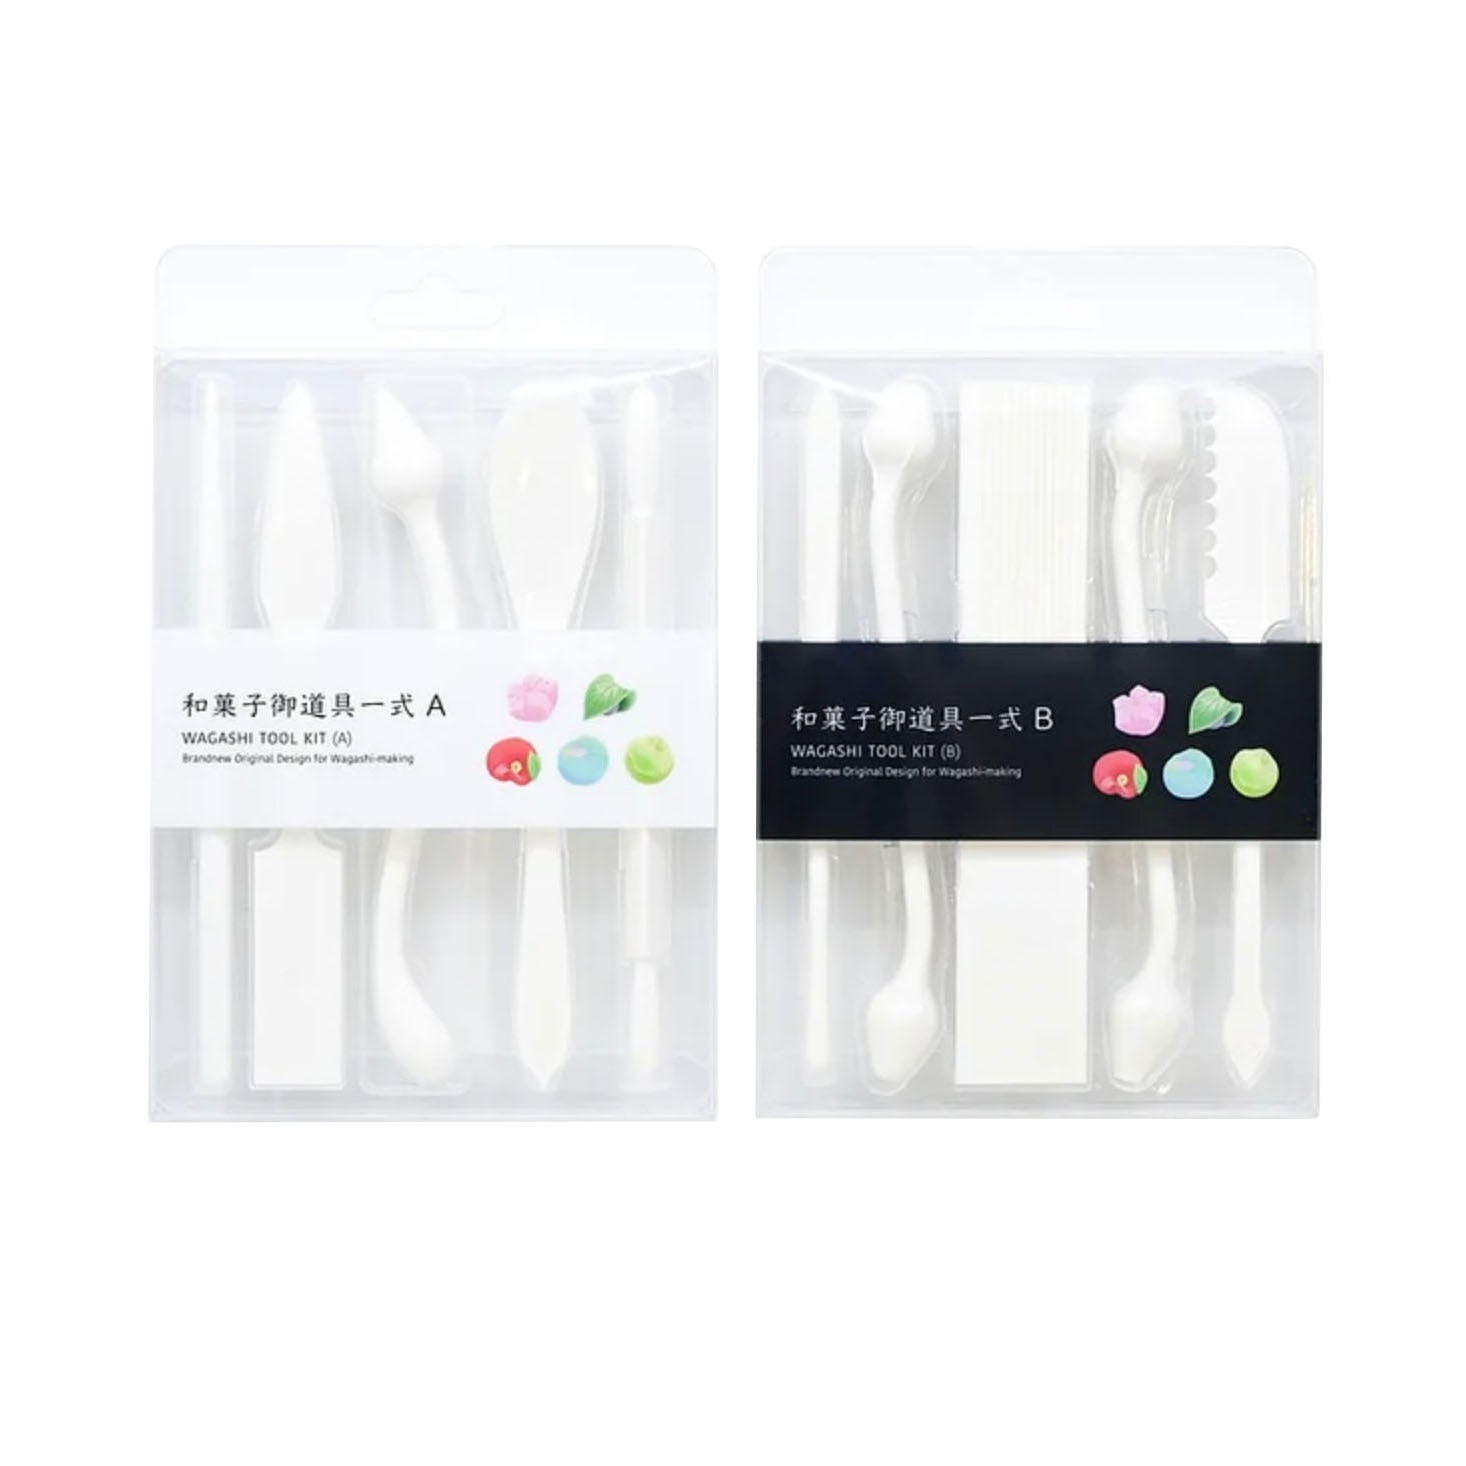 KADO ICHIKA Basic Wagashi Plastic Tool Set B